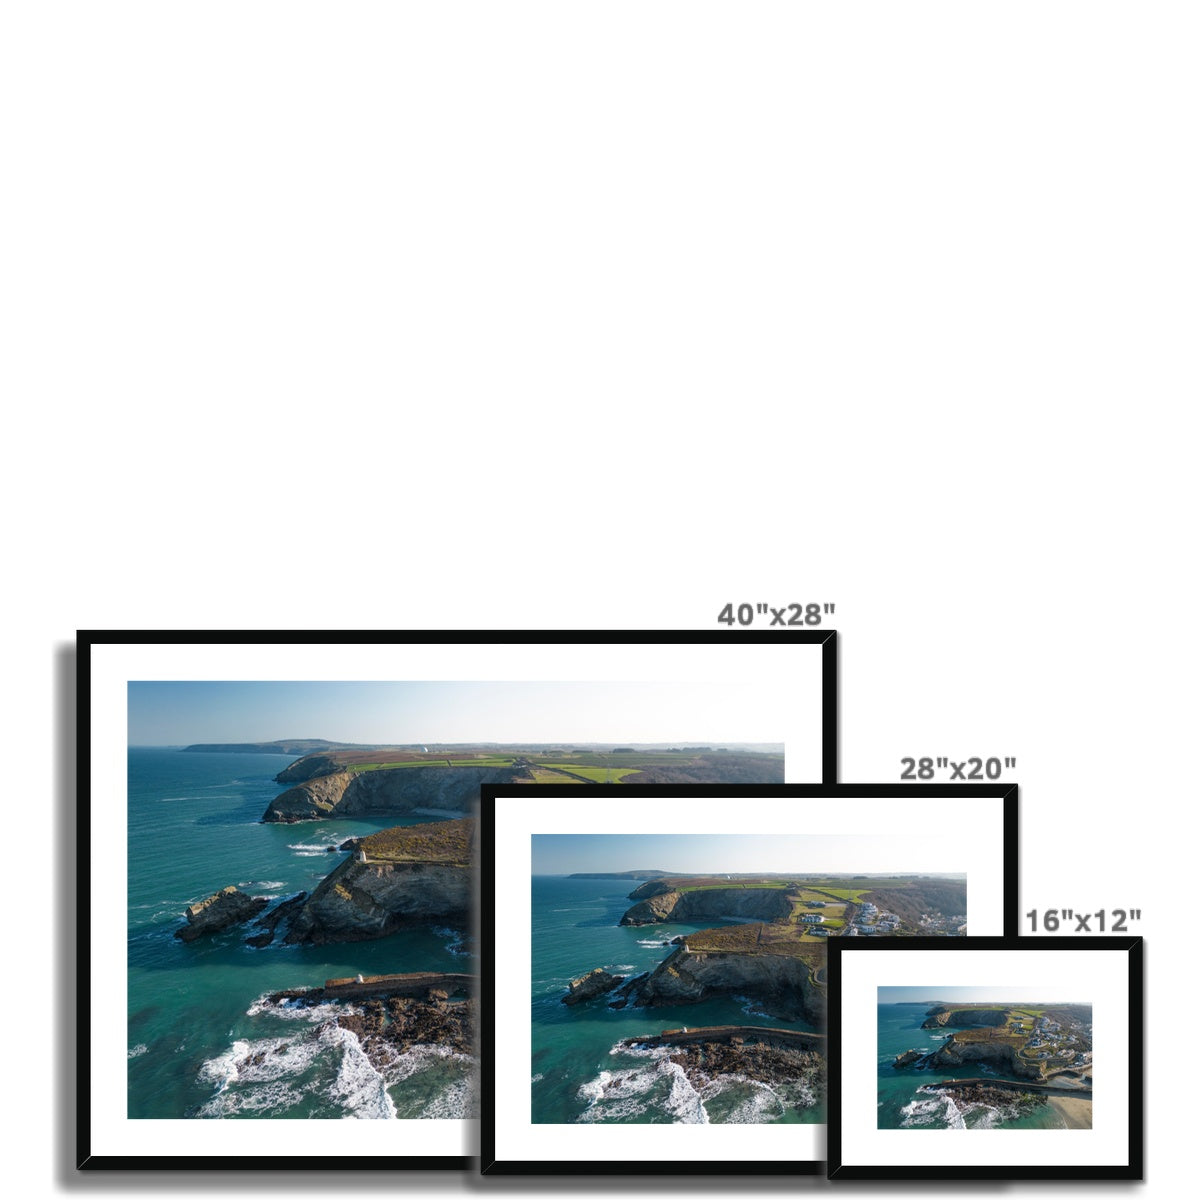 Portreath Harbour & Cliffs ~ Framed & Mounted Print